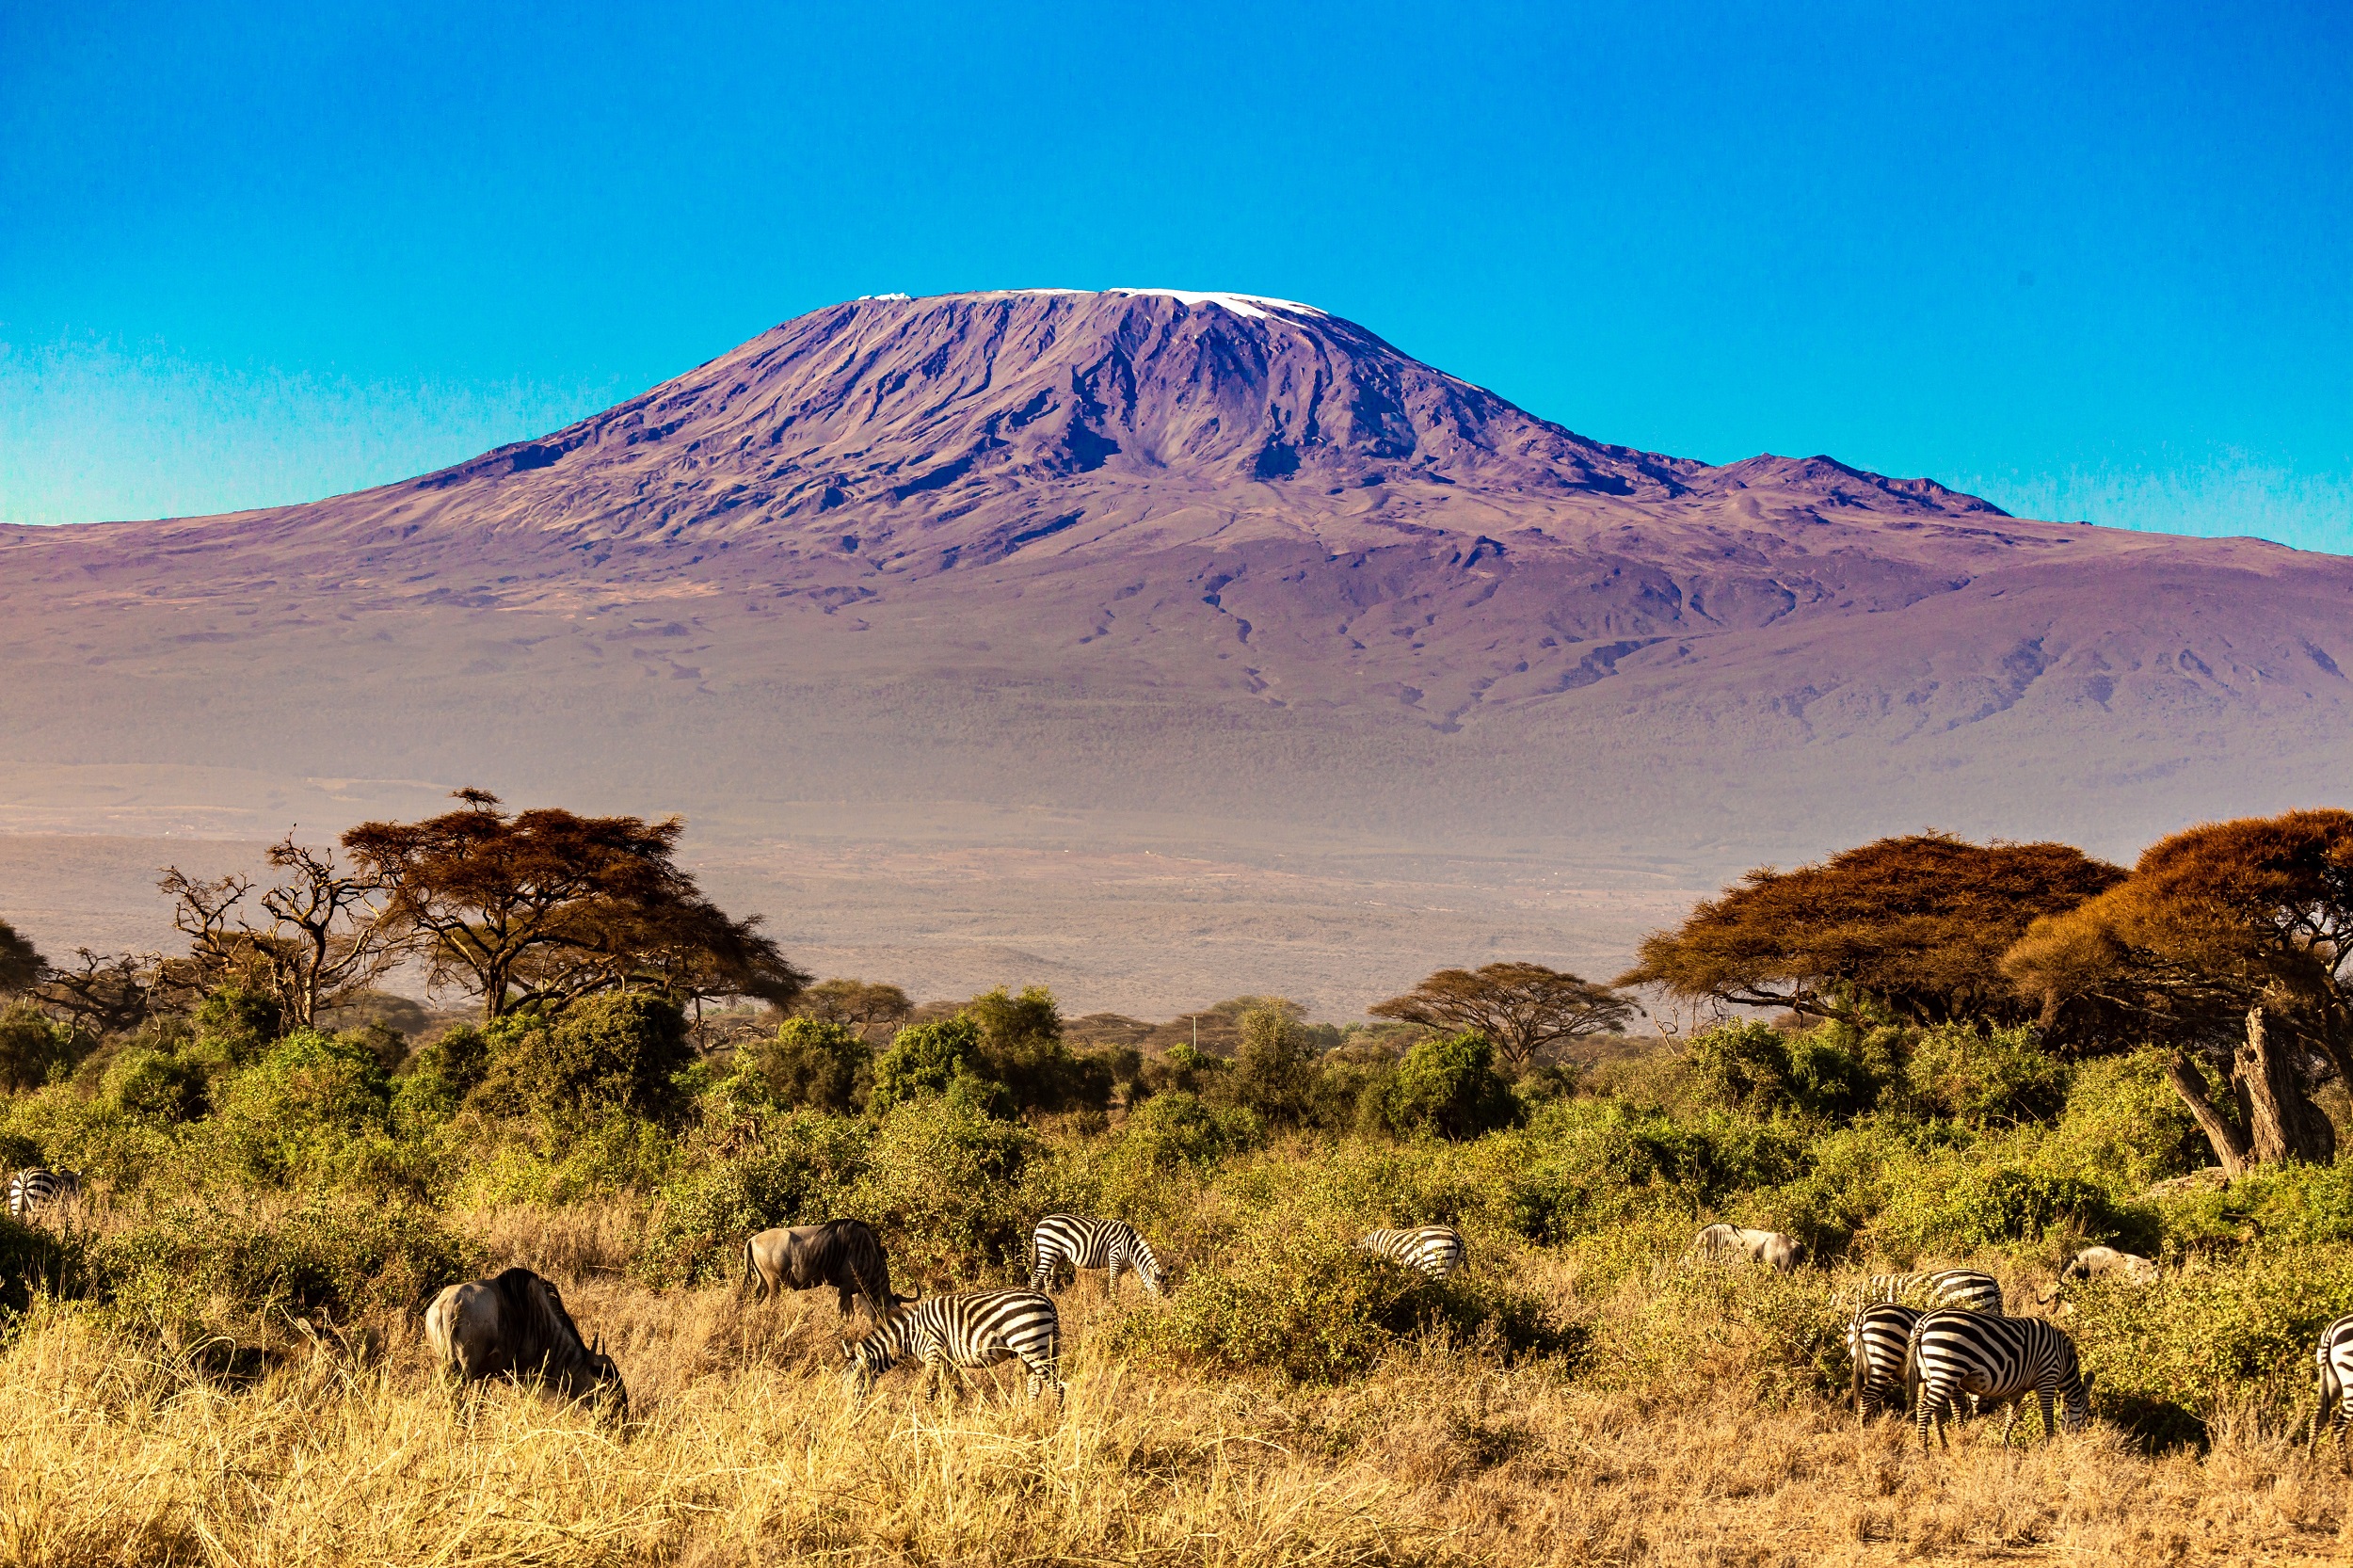 Mount Kilimanjaro as seen from Kilimanjaro National Park